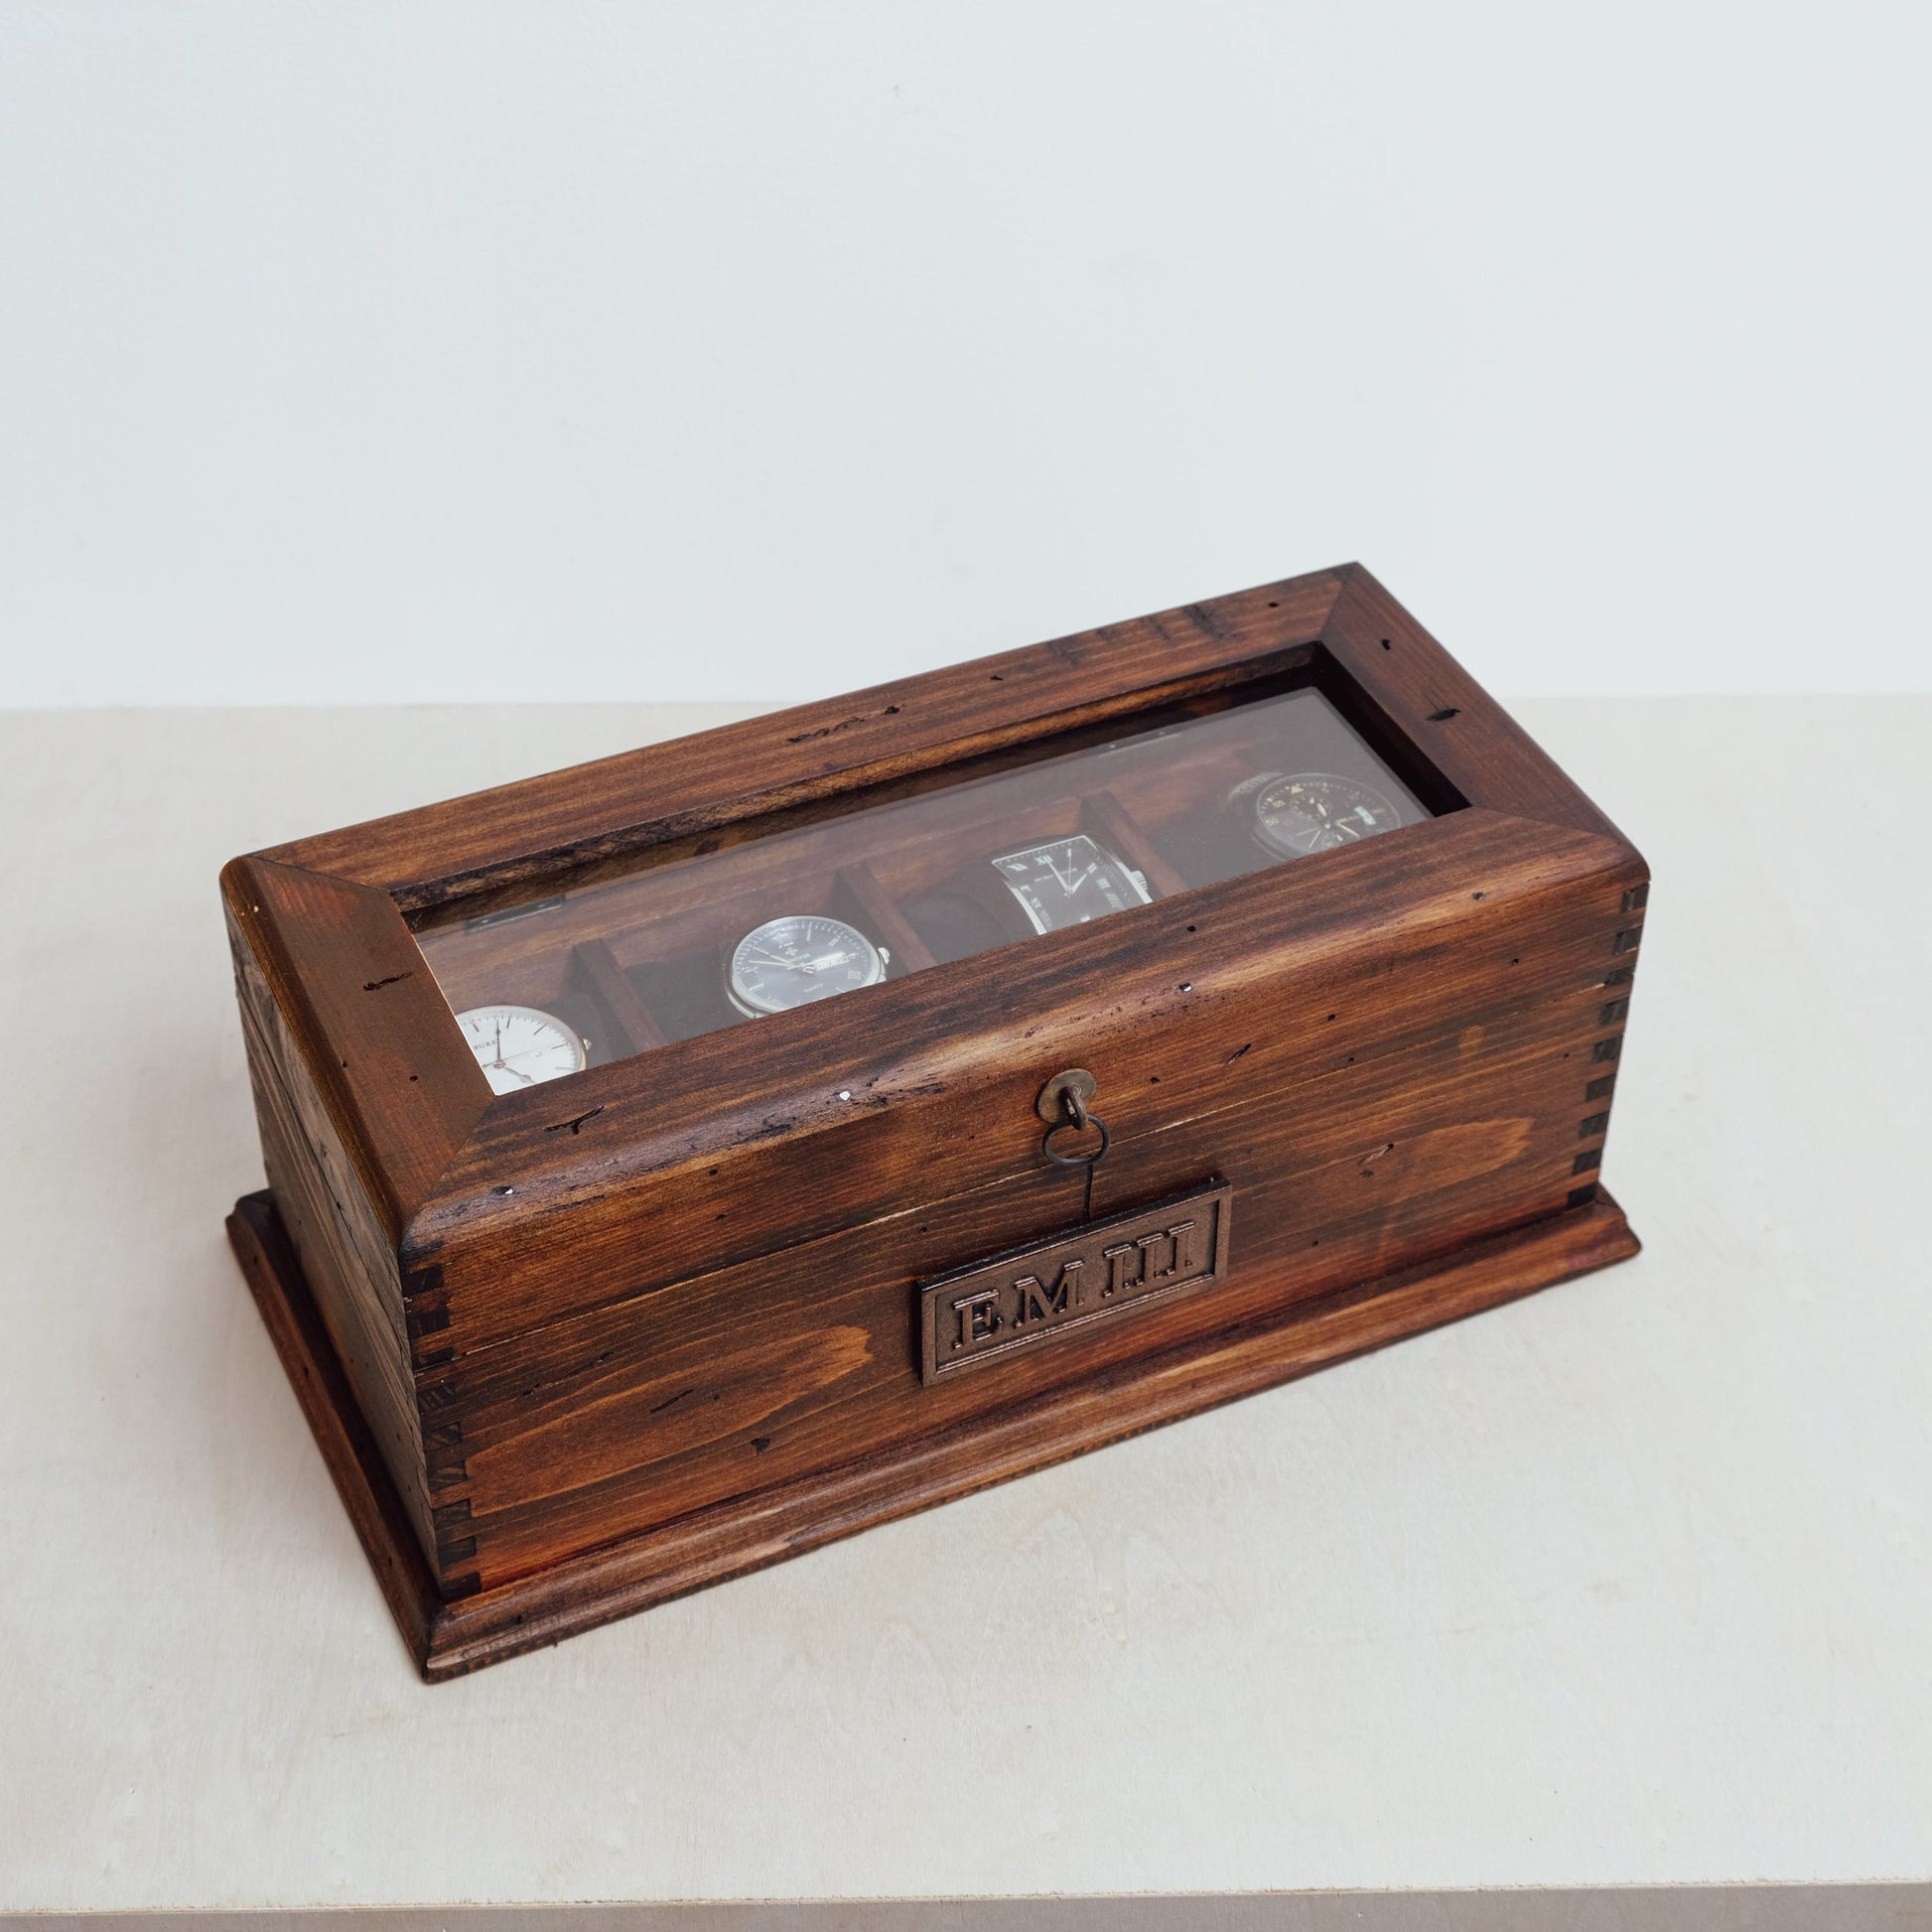 Watch Box with secret compartment No.4 - Deferichs